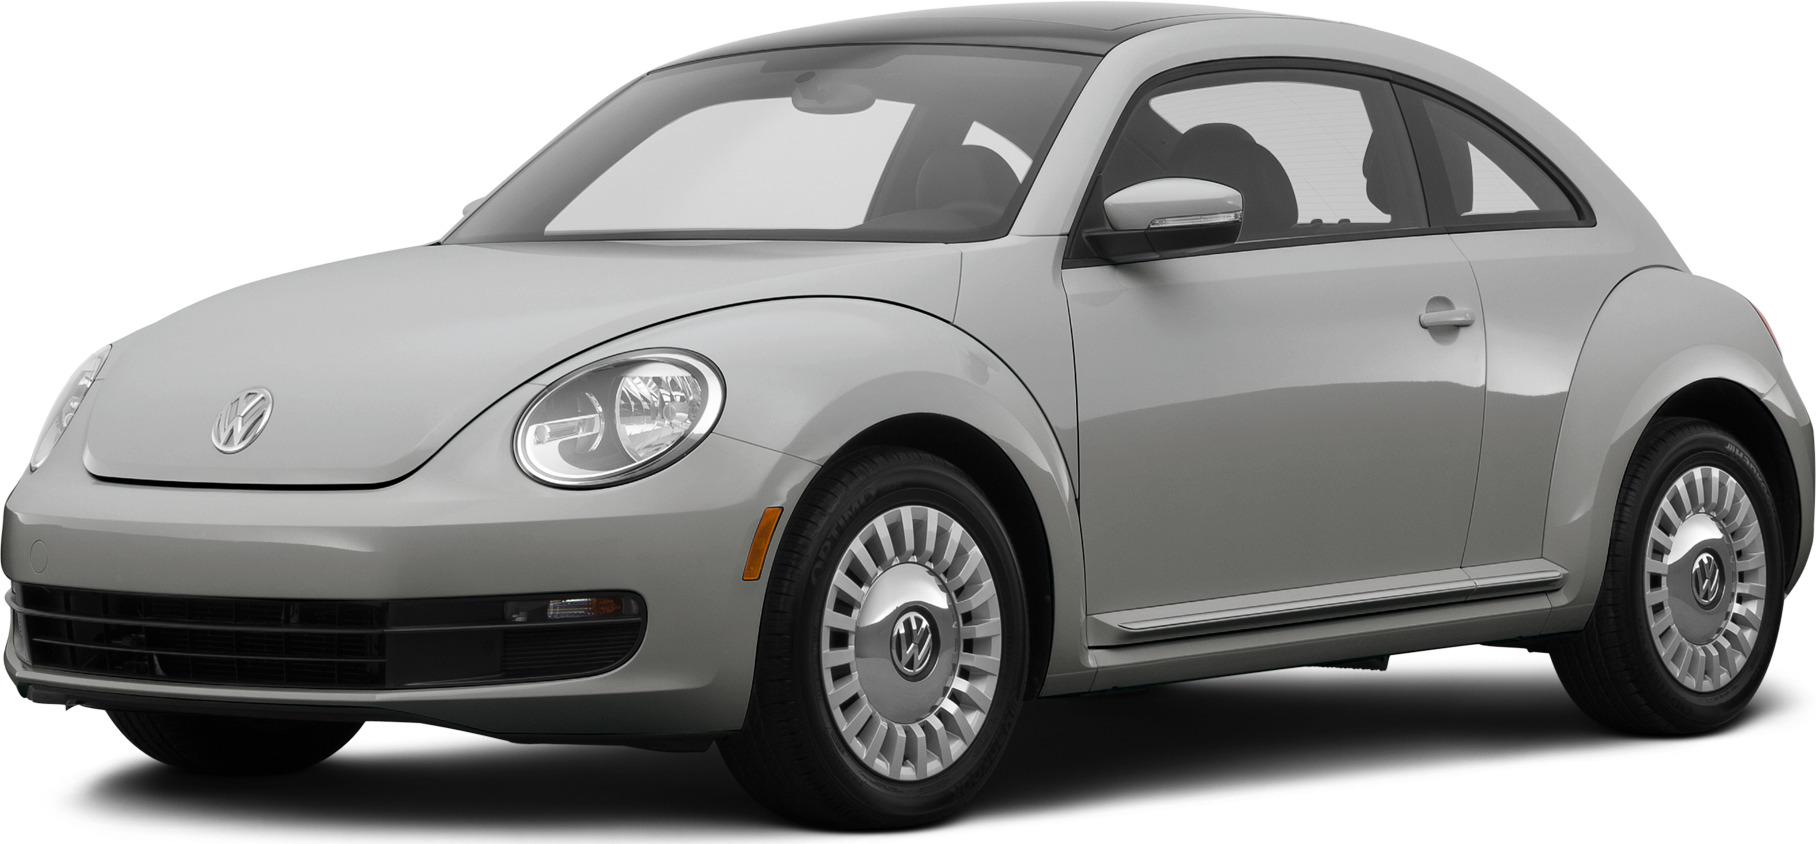 2014 Volkswagen Beetle Price Value Ratings And Reviews Kelley Blue Book